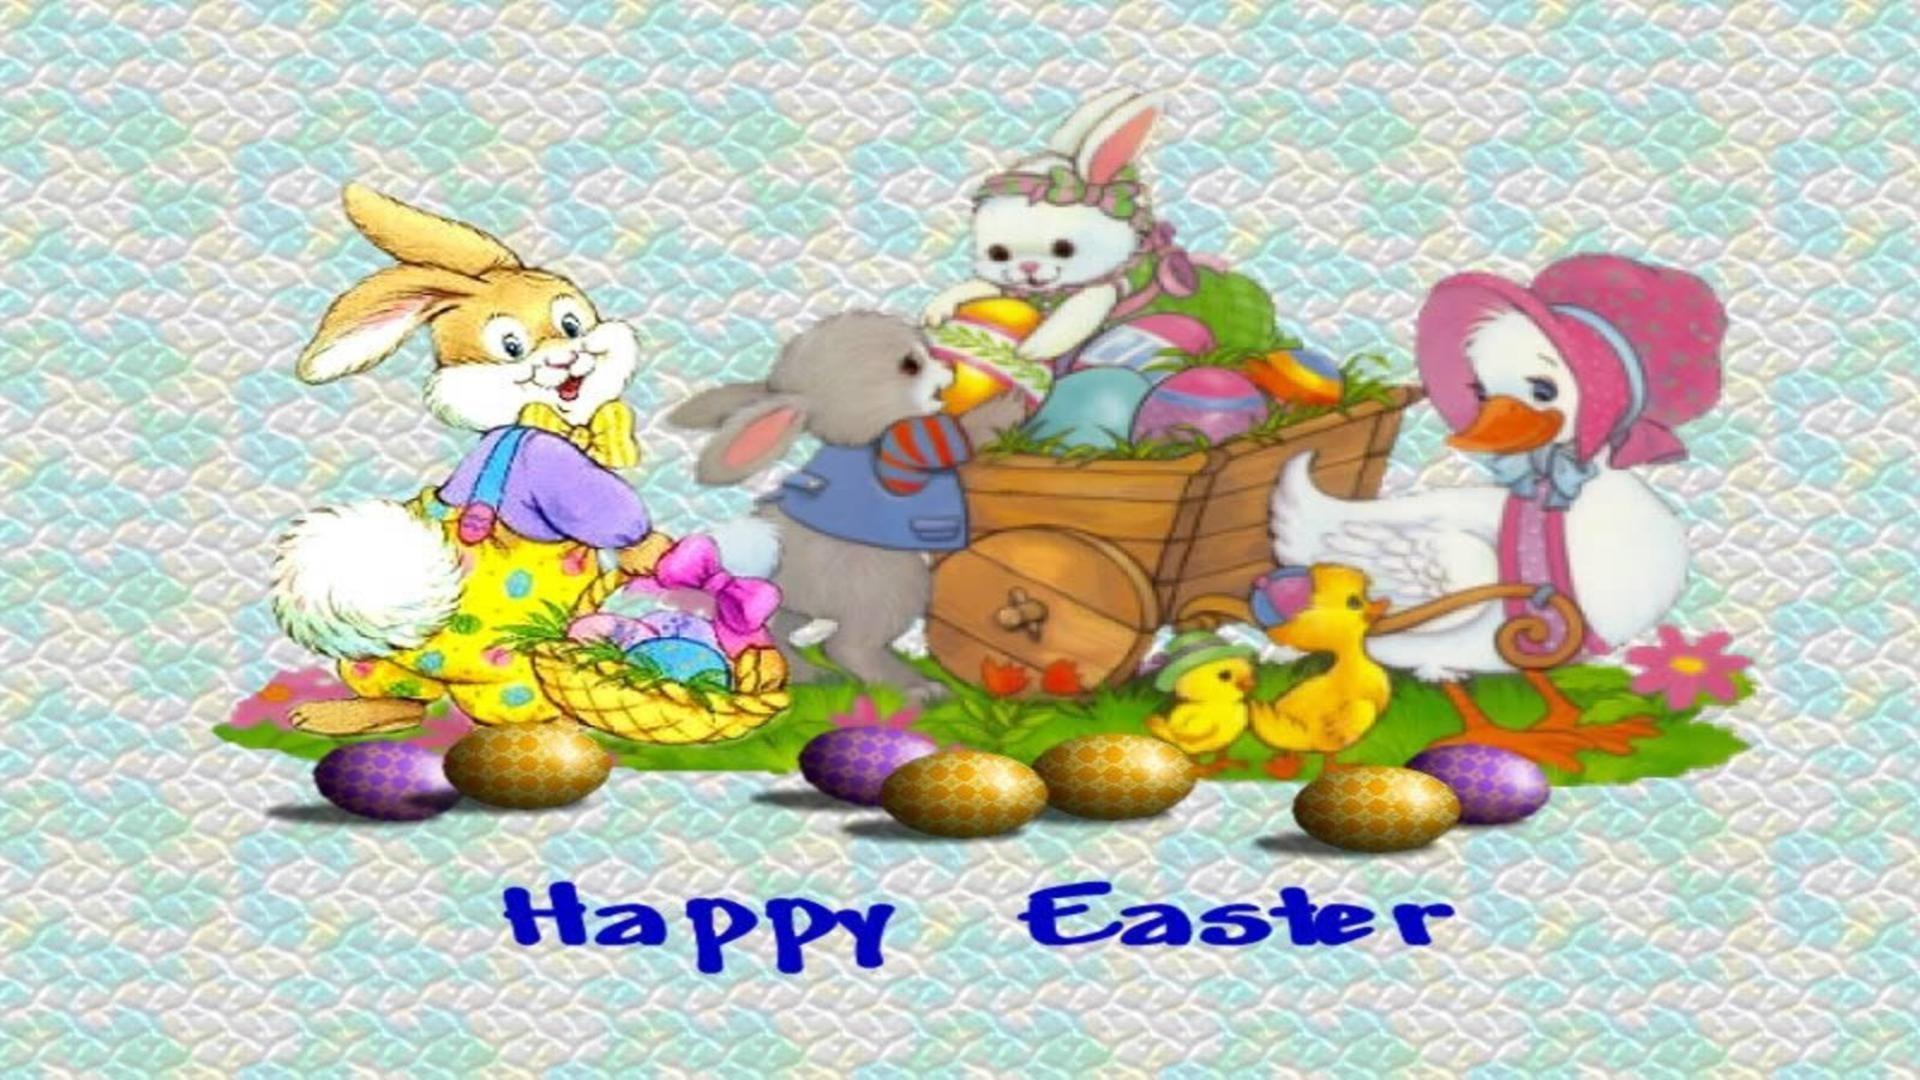 Easter image themes free desktop background wallpaper image